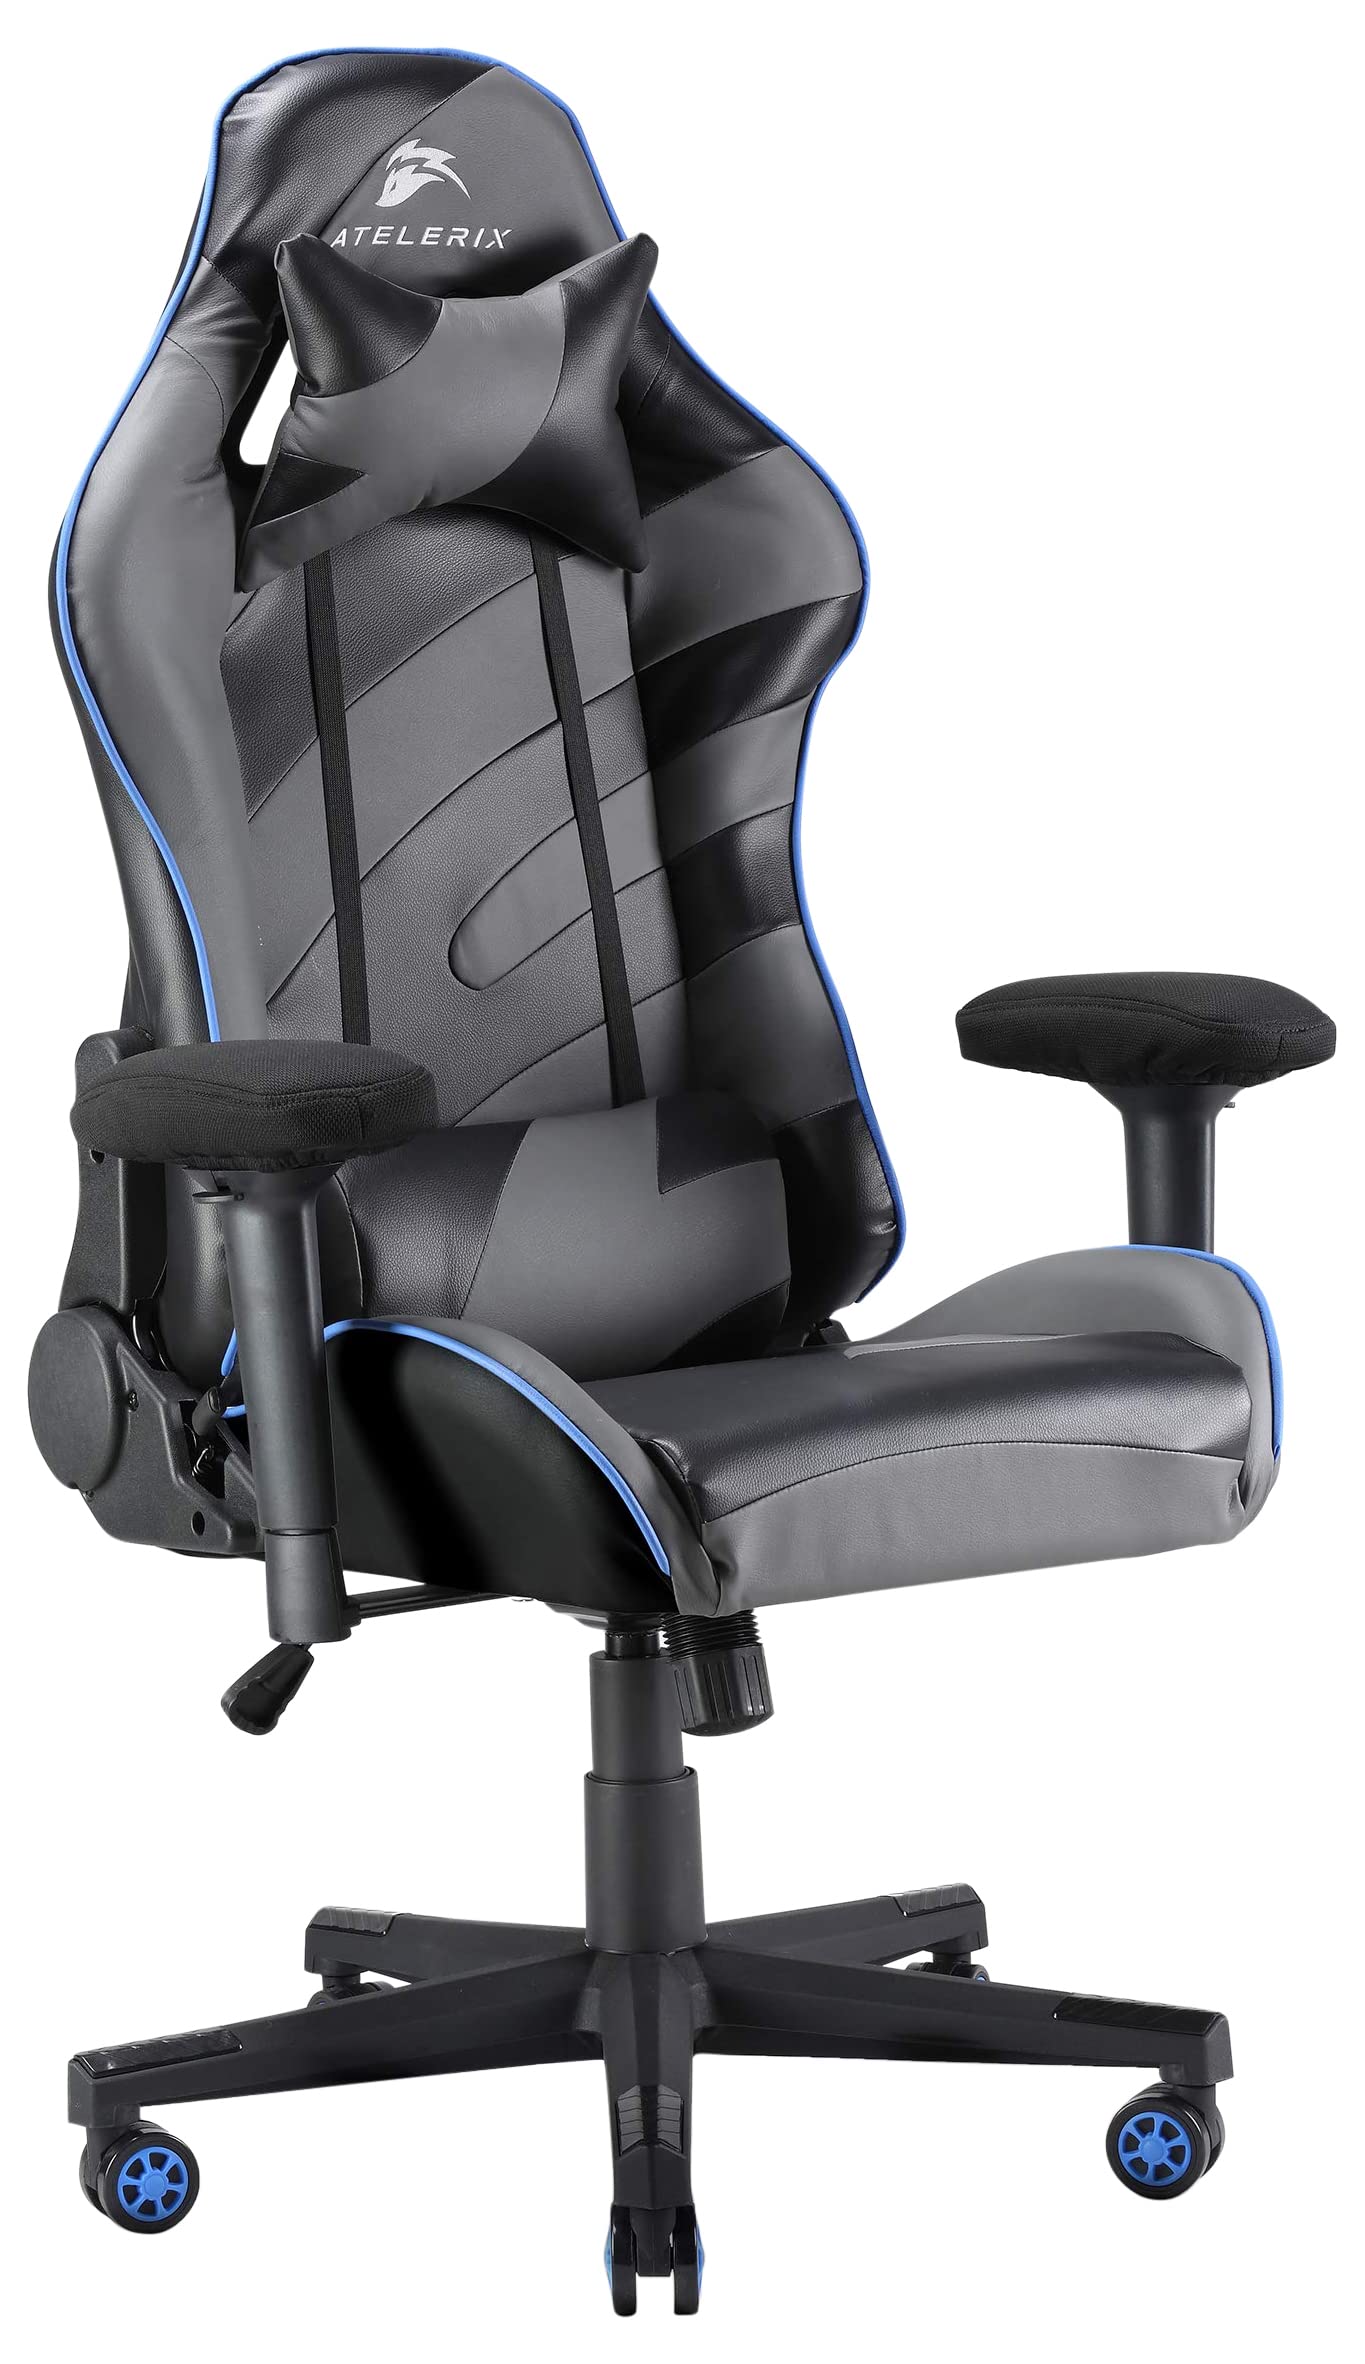 JOOLA Atelerix Ventris Equinox PU Leather gaming chair - Desk, Office or computer chair - Tilting Mechanism & Ergonomic Adjustable Swi